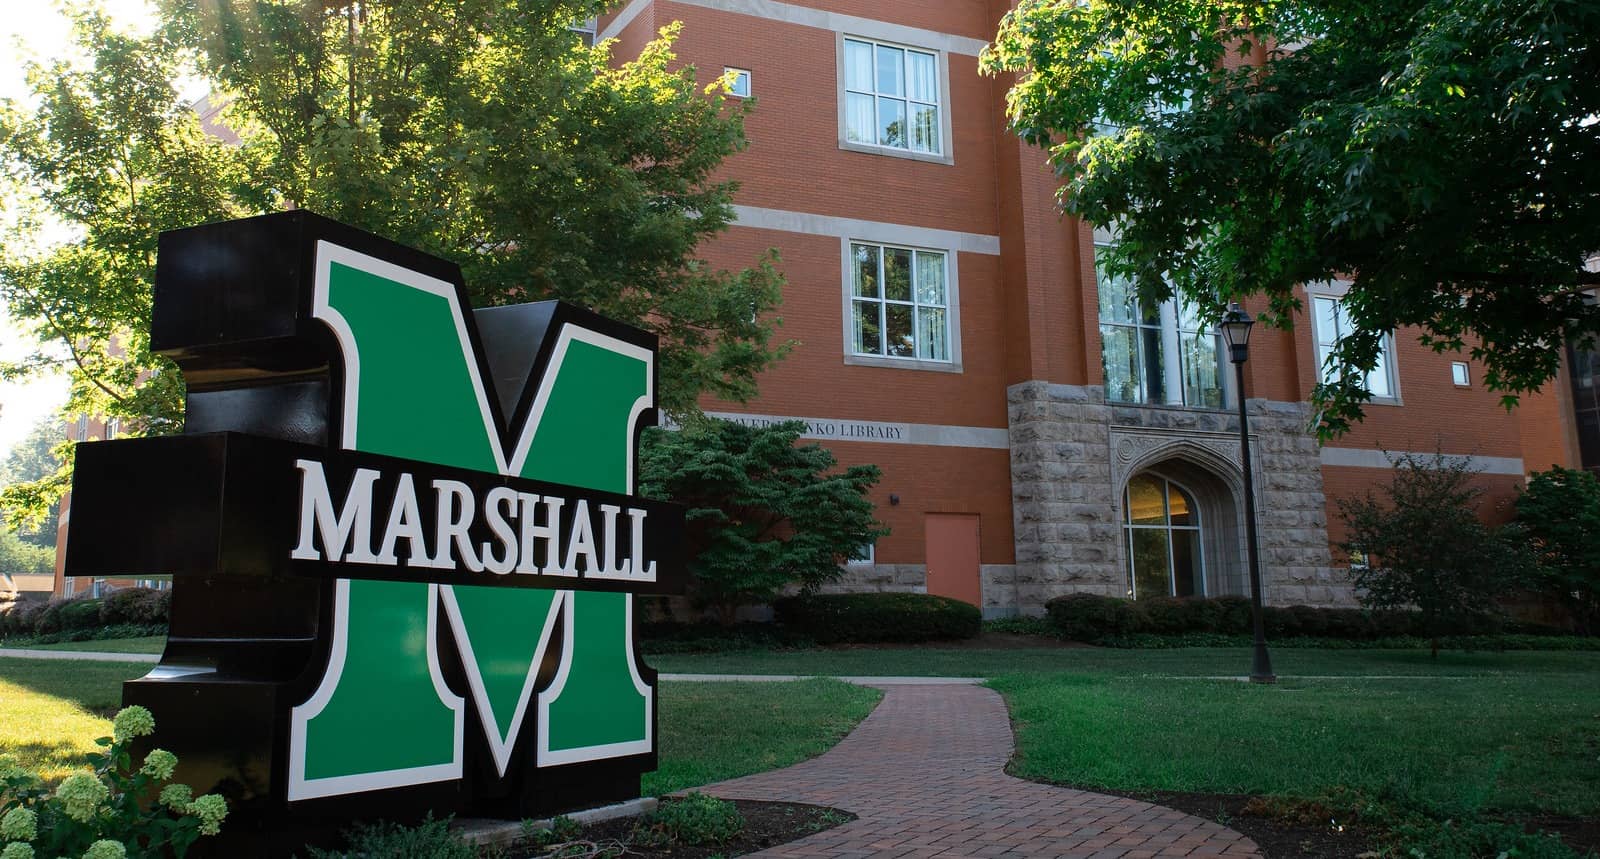 marshall university campus visit